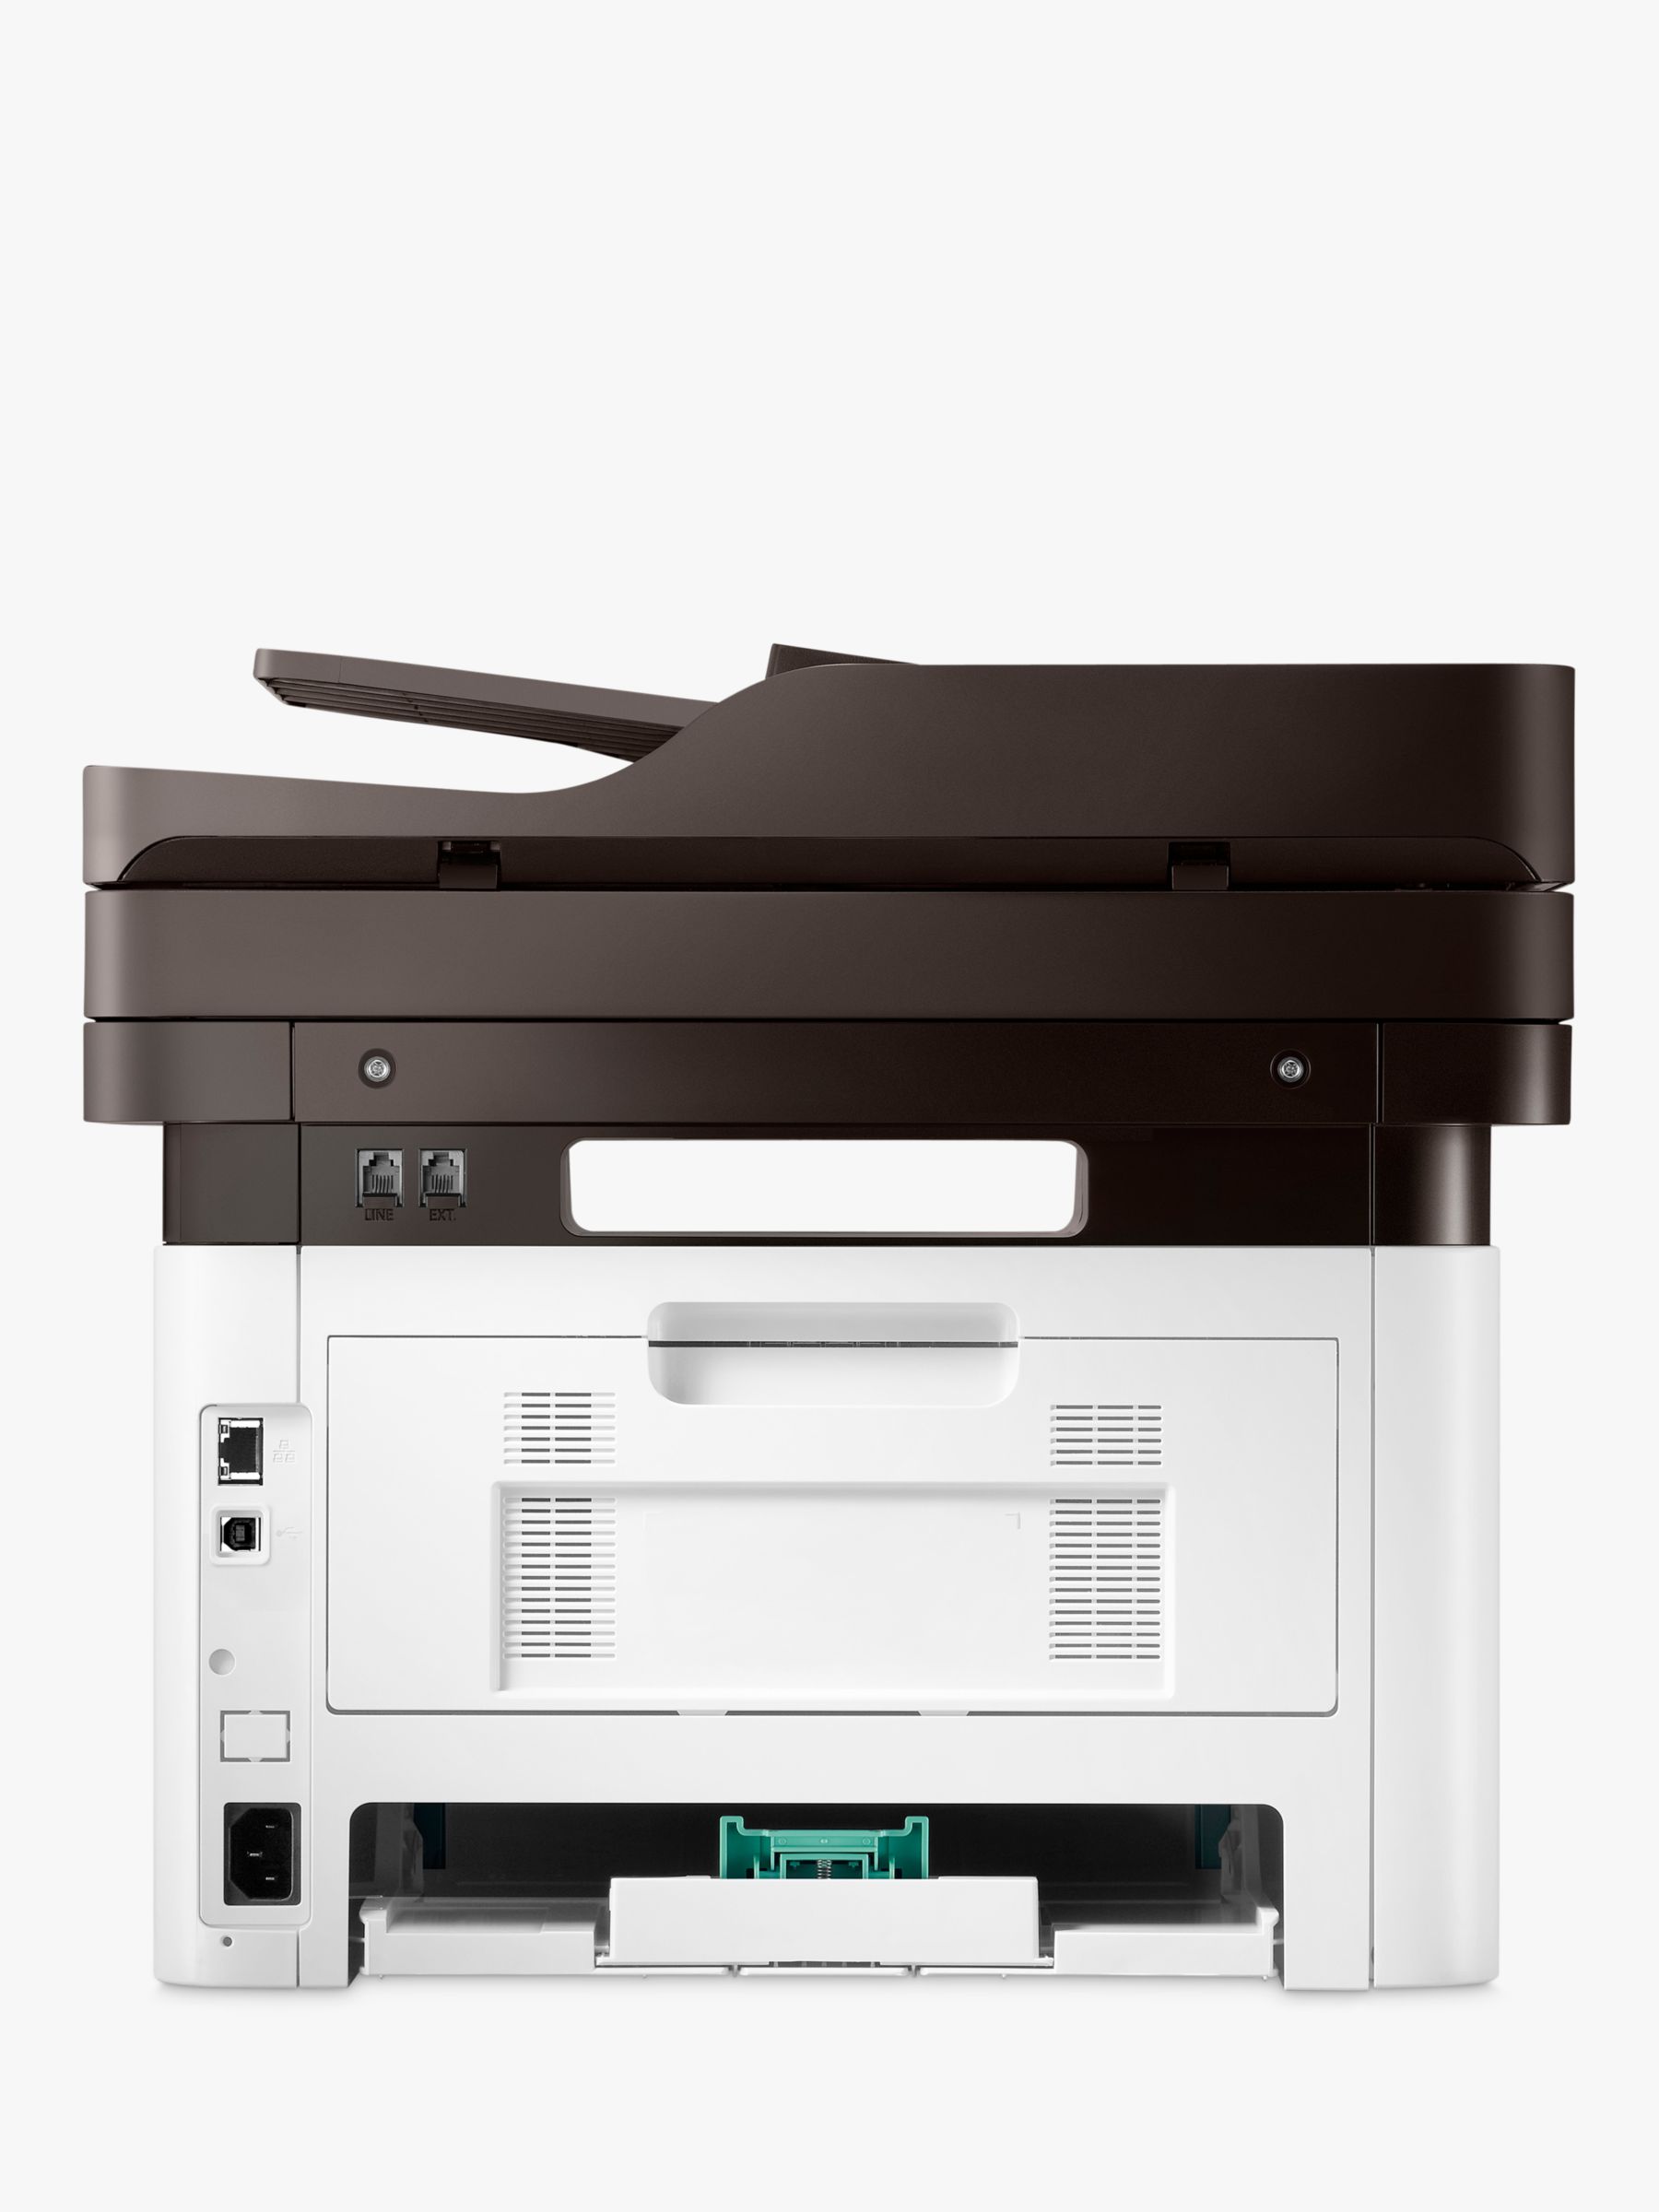 Sempress: Samsung Printer For Mac